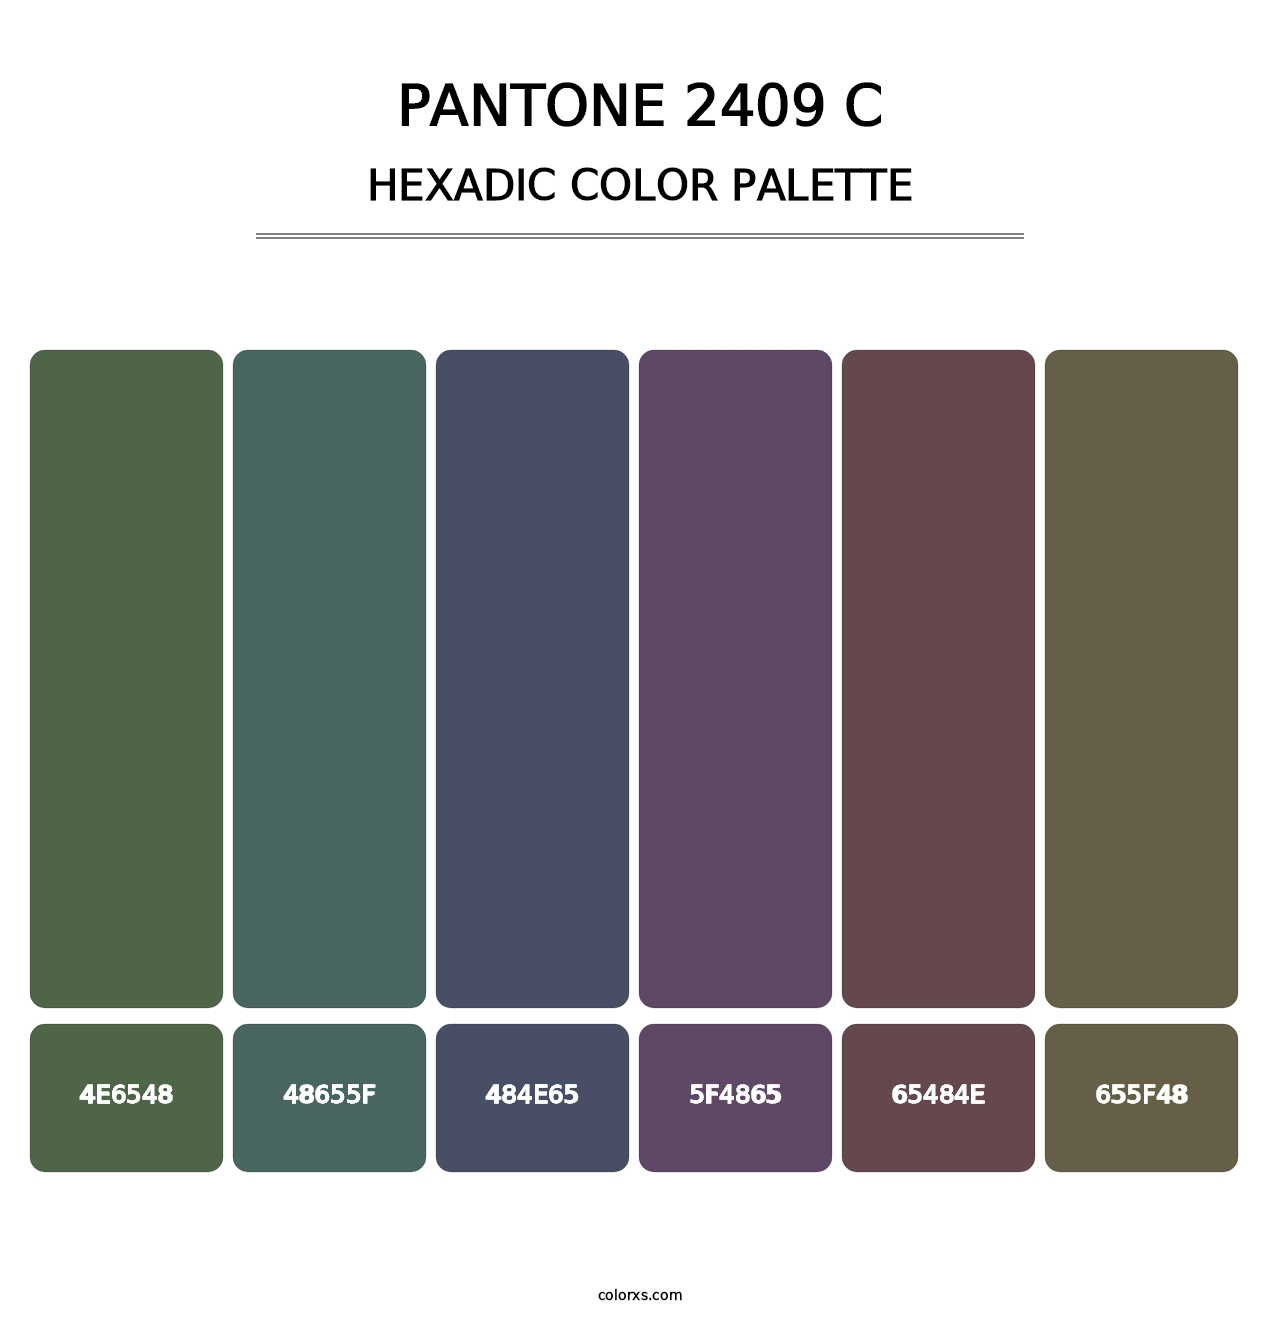 PANTONE 2409 C - Hexadic Color Palette